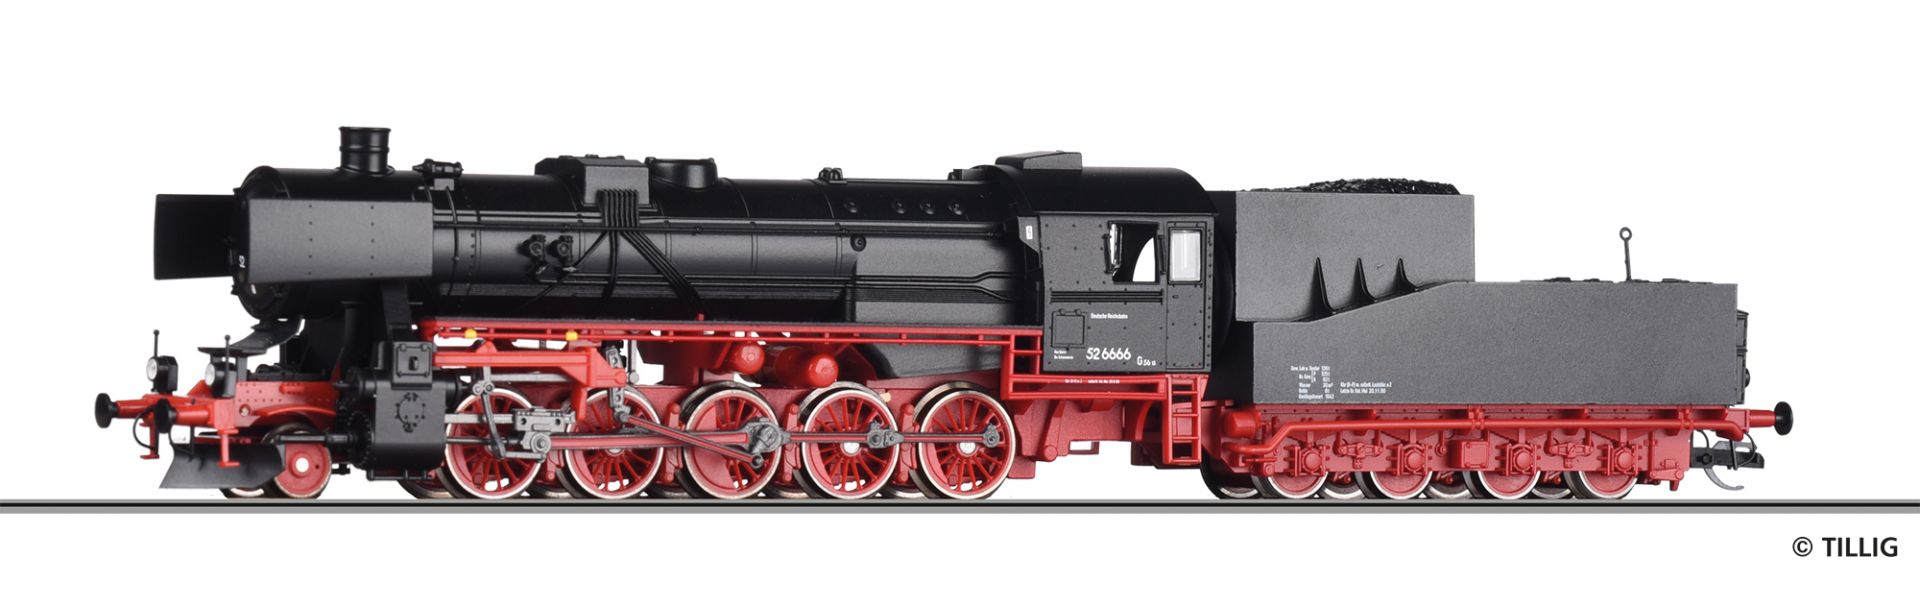 502391 | Dampflokomotive Museum